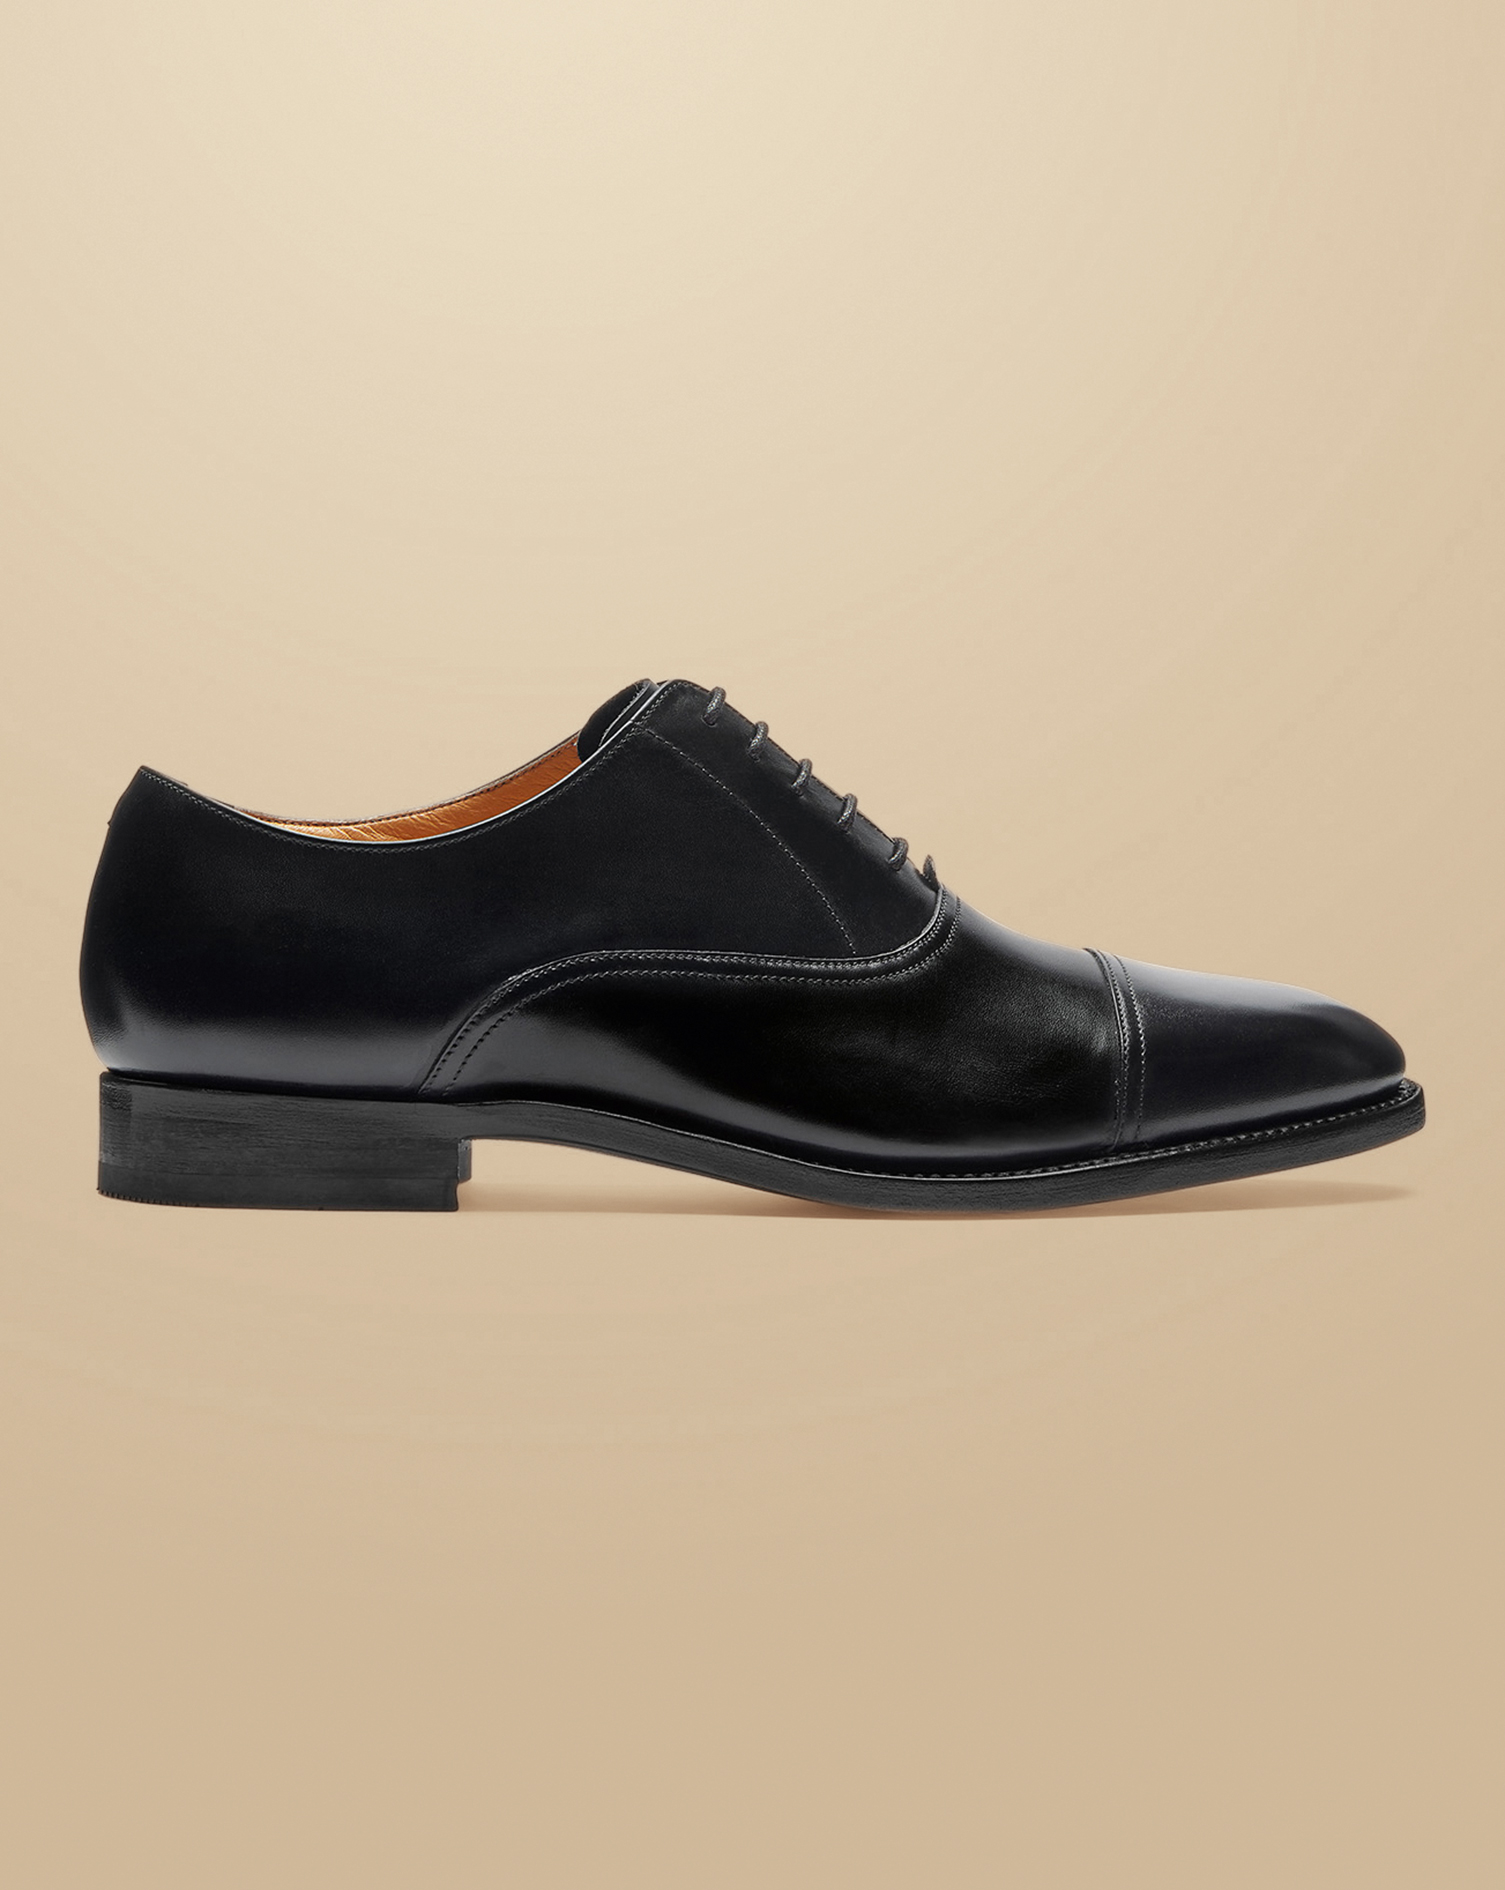 Men's Charles Tyrwhitt Oxford Shoes - Black Size 12 Leather
